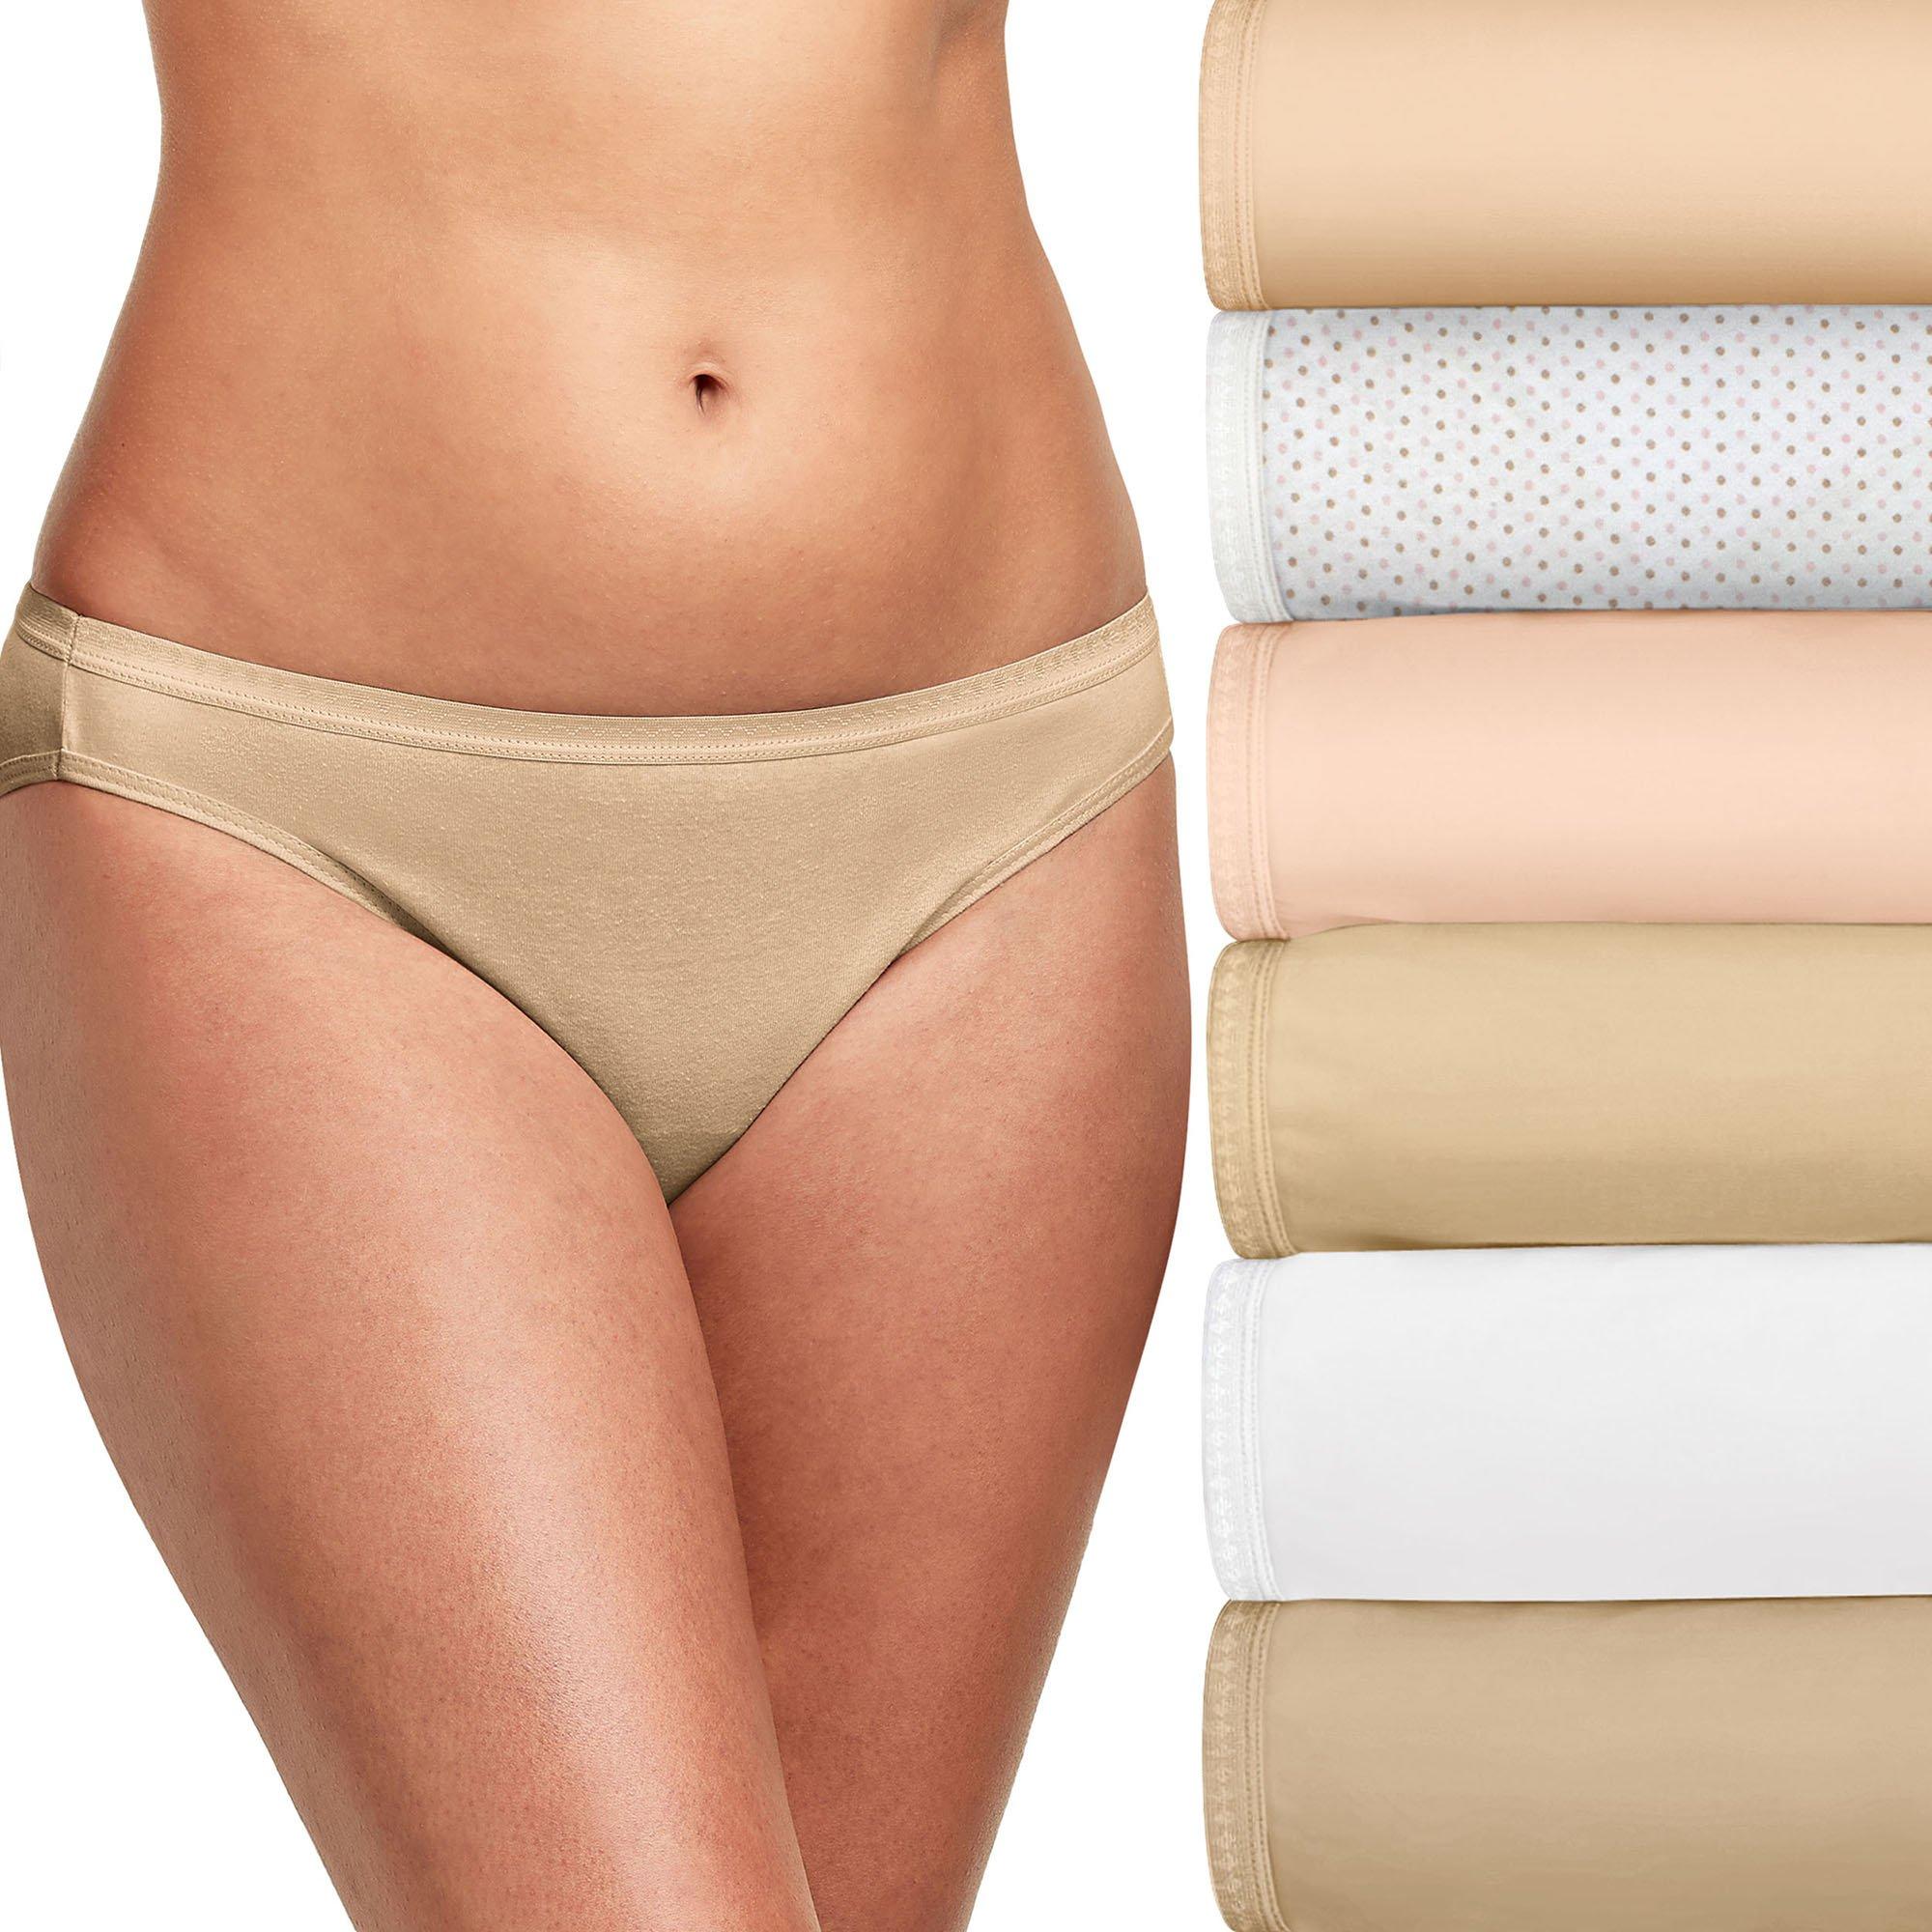 72 Pieces Girls Cotton Blend Assorted Printed Underwear Size 4t